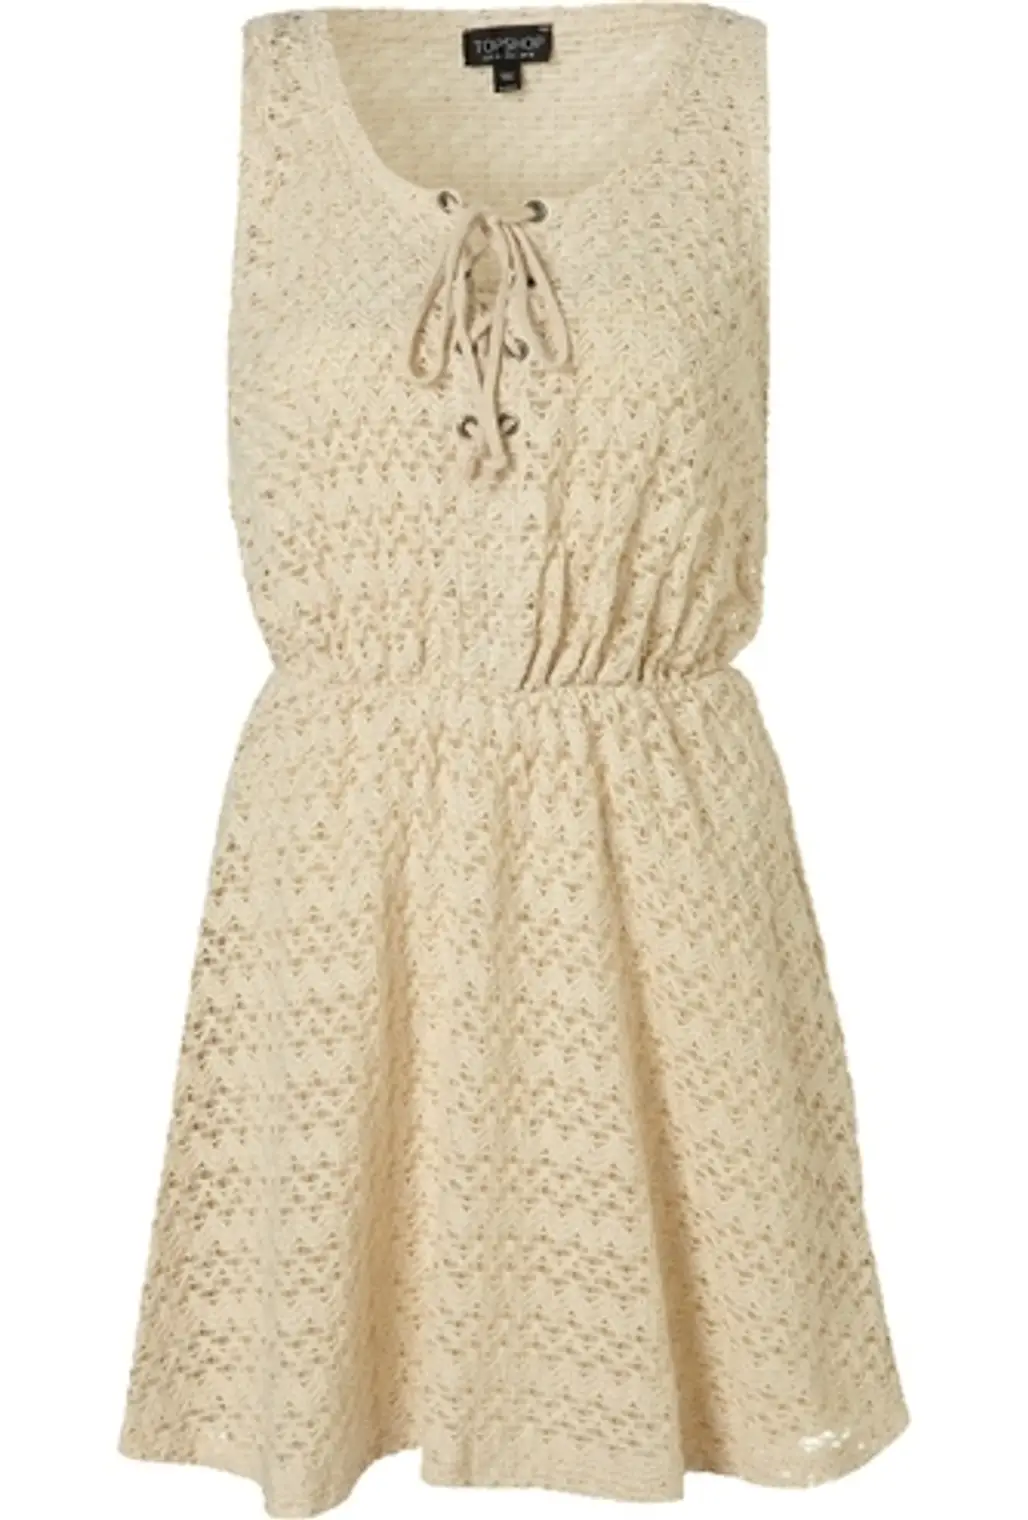 Topshop Cream Crochet Lace up Front Dress